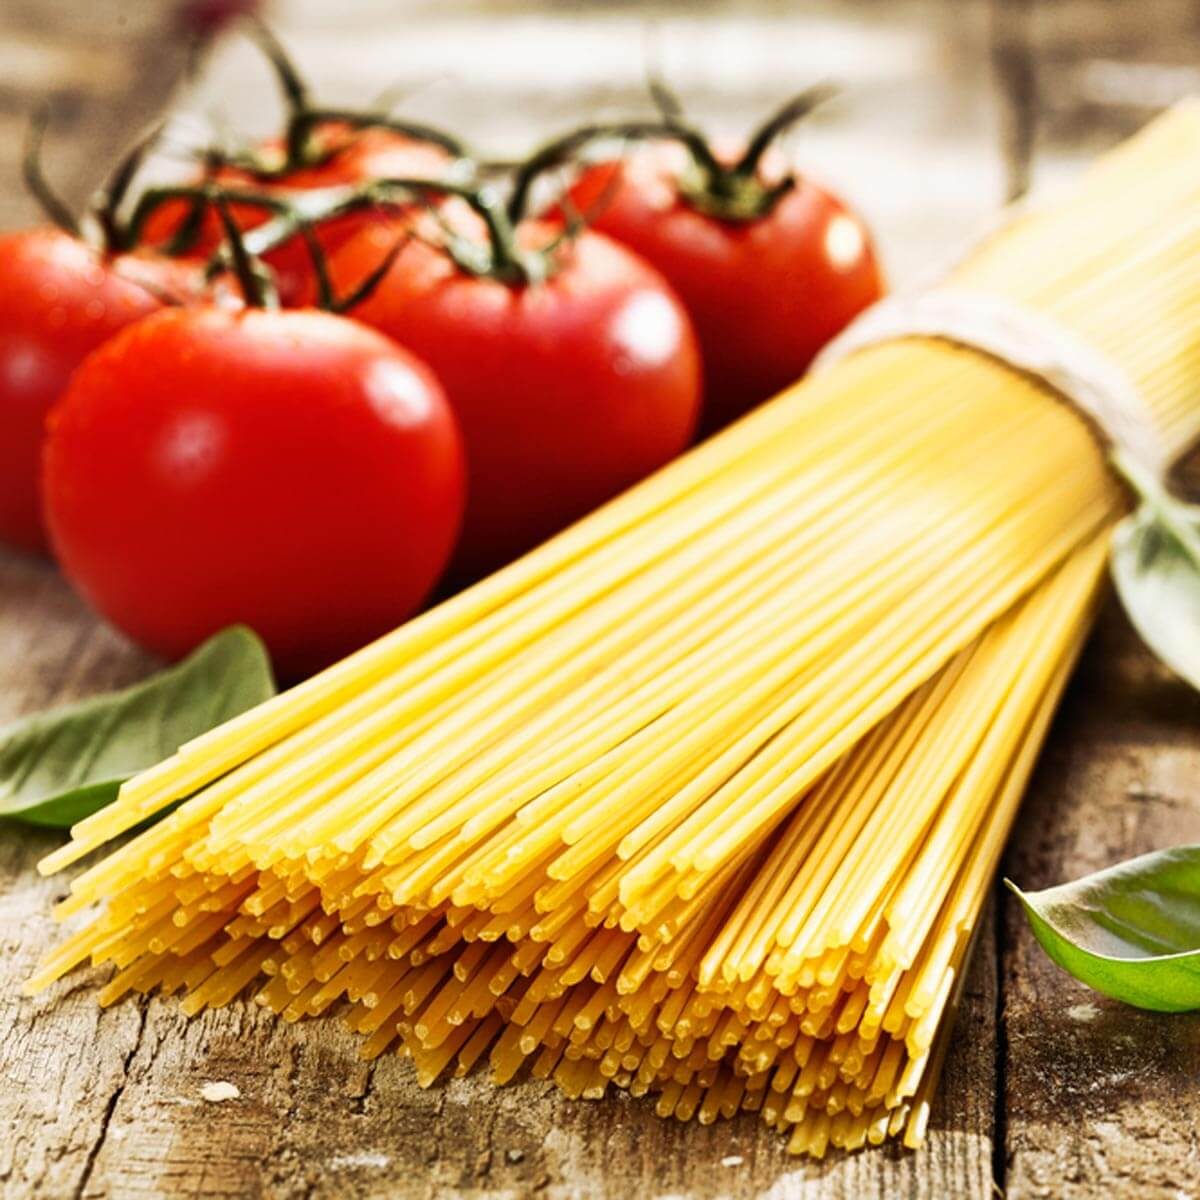 Dry pasta nooodles